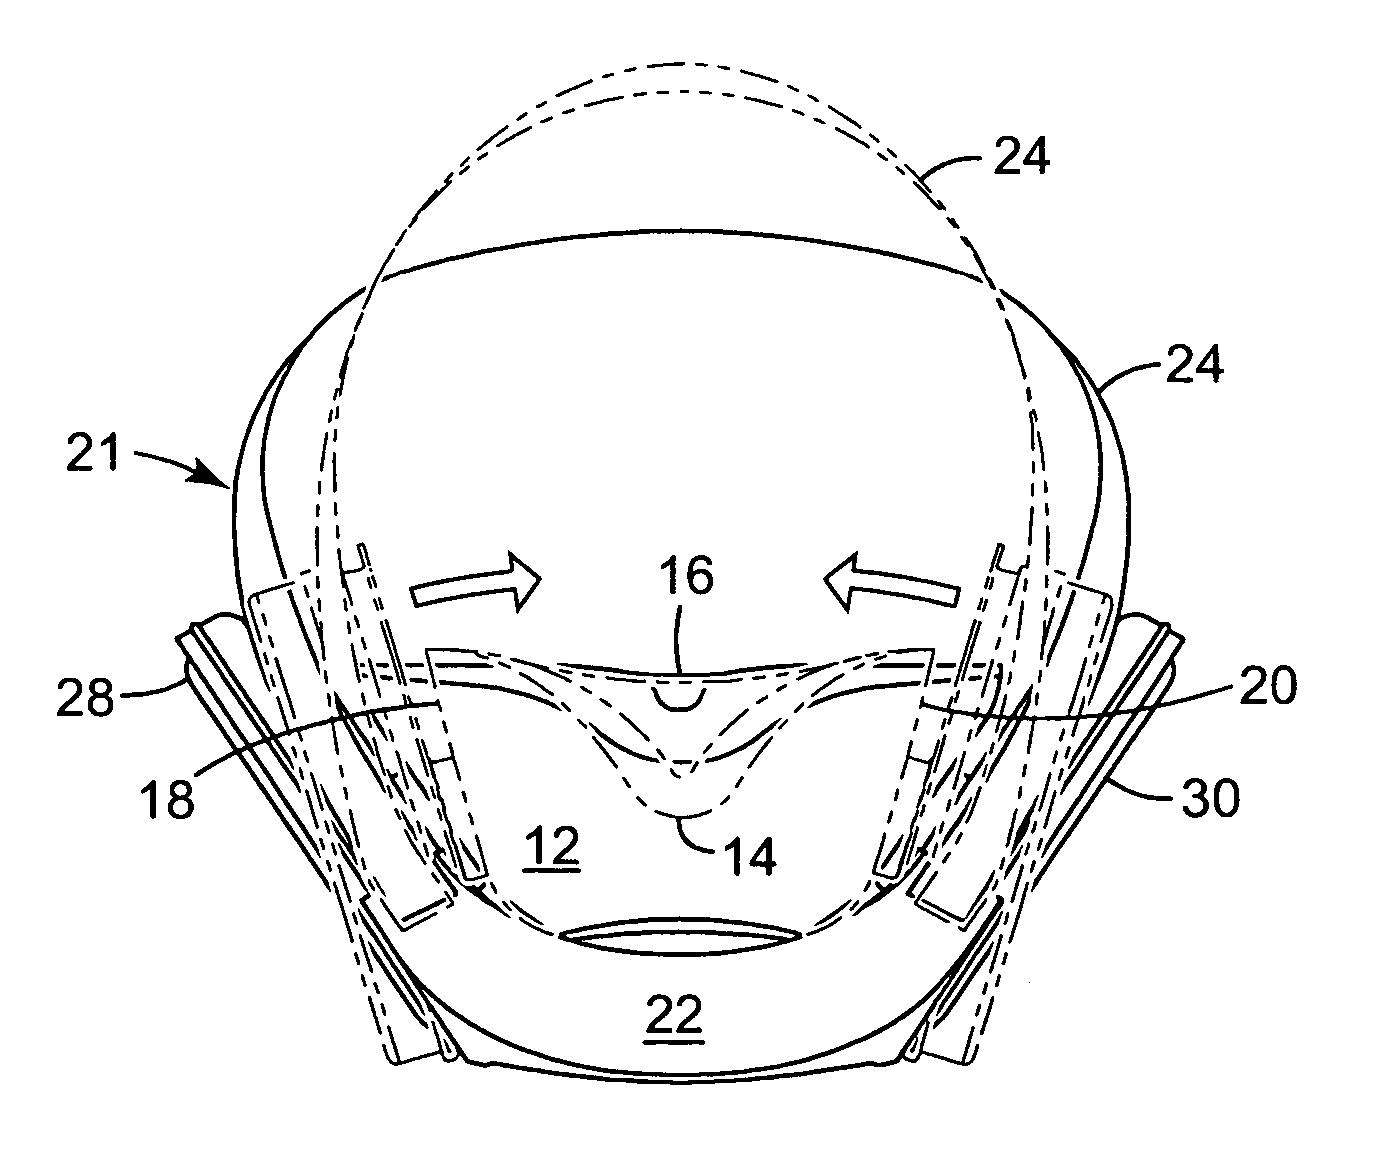 Non-elastomeric respirator mask that has deformable cheek portions